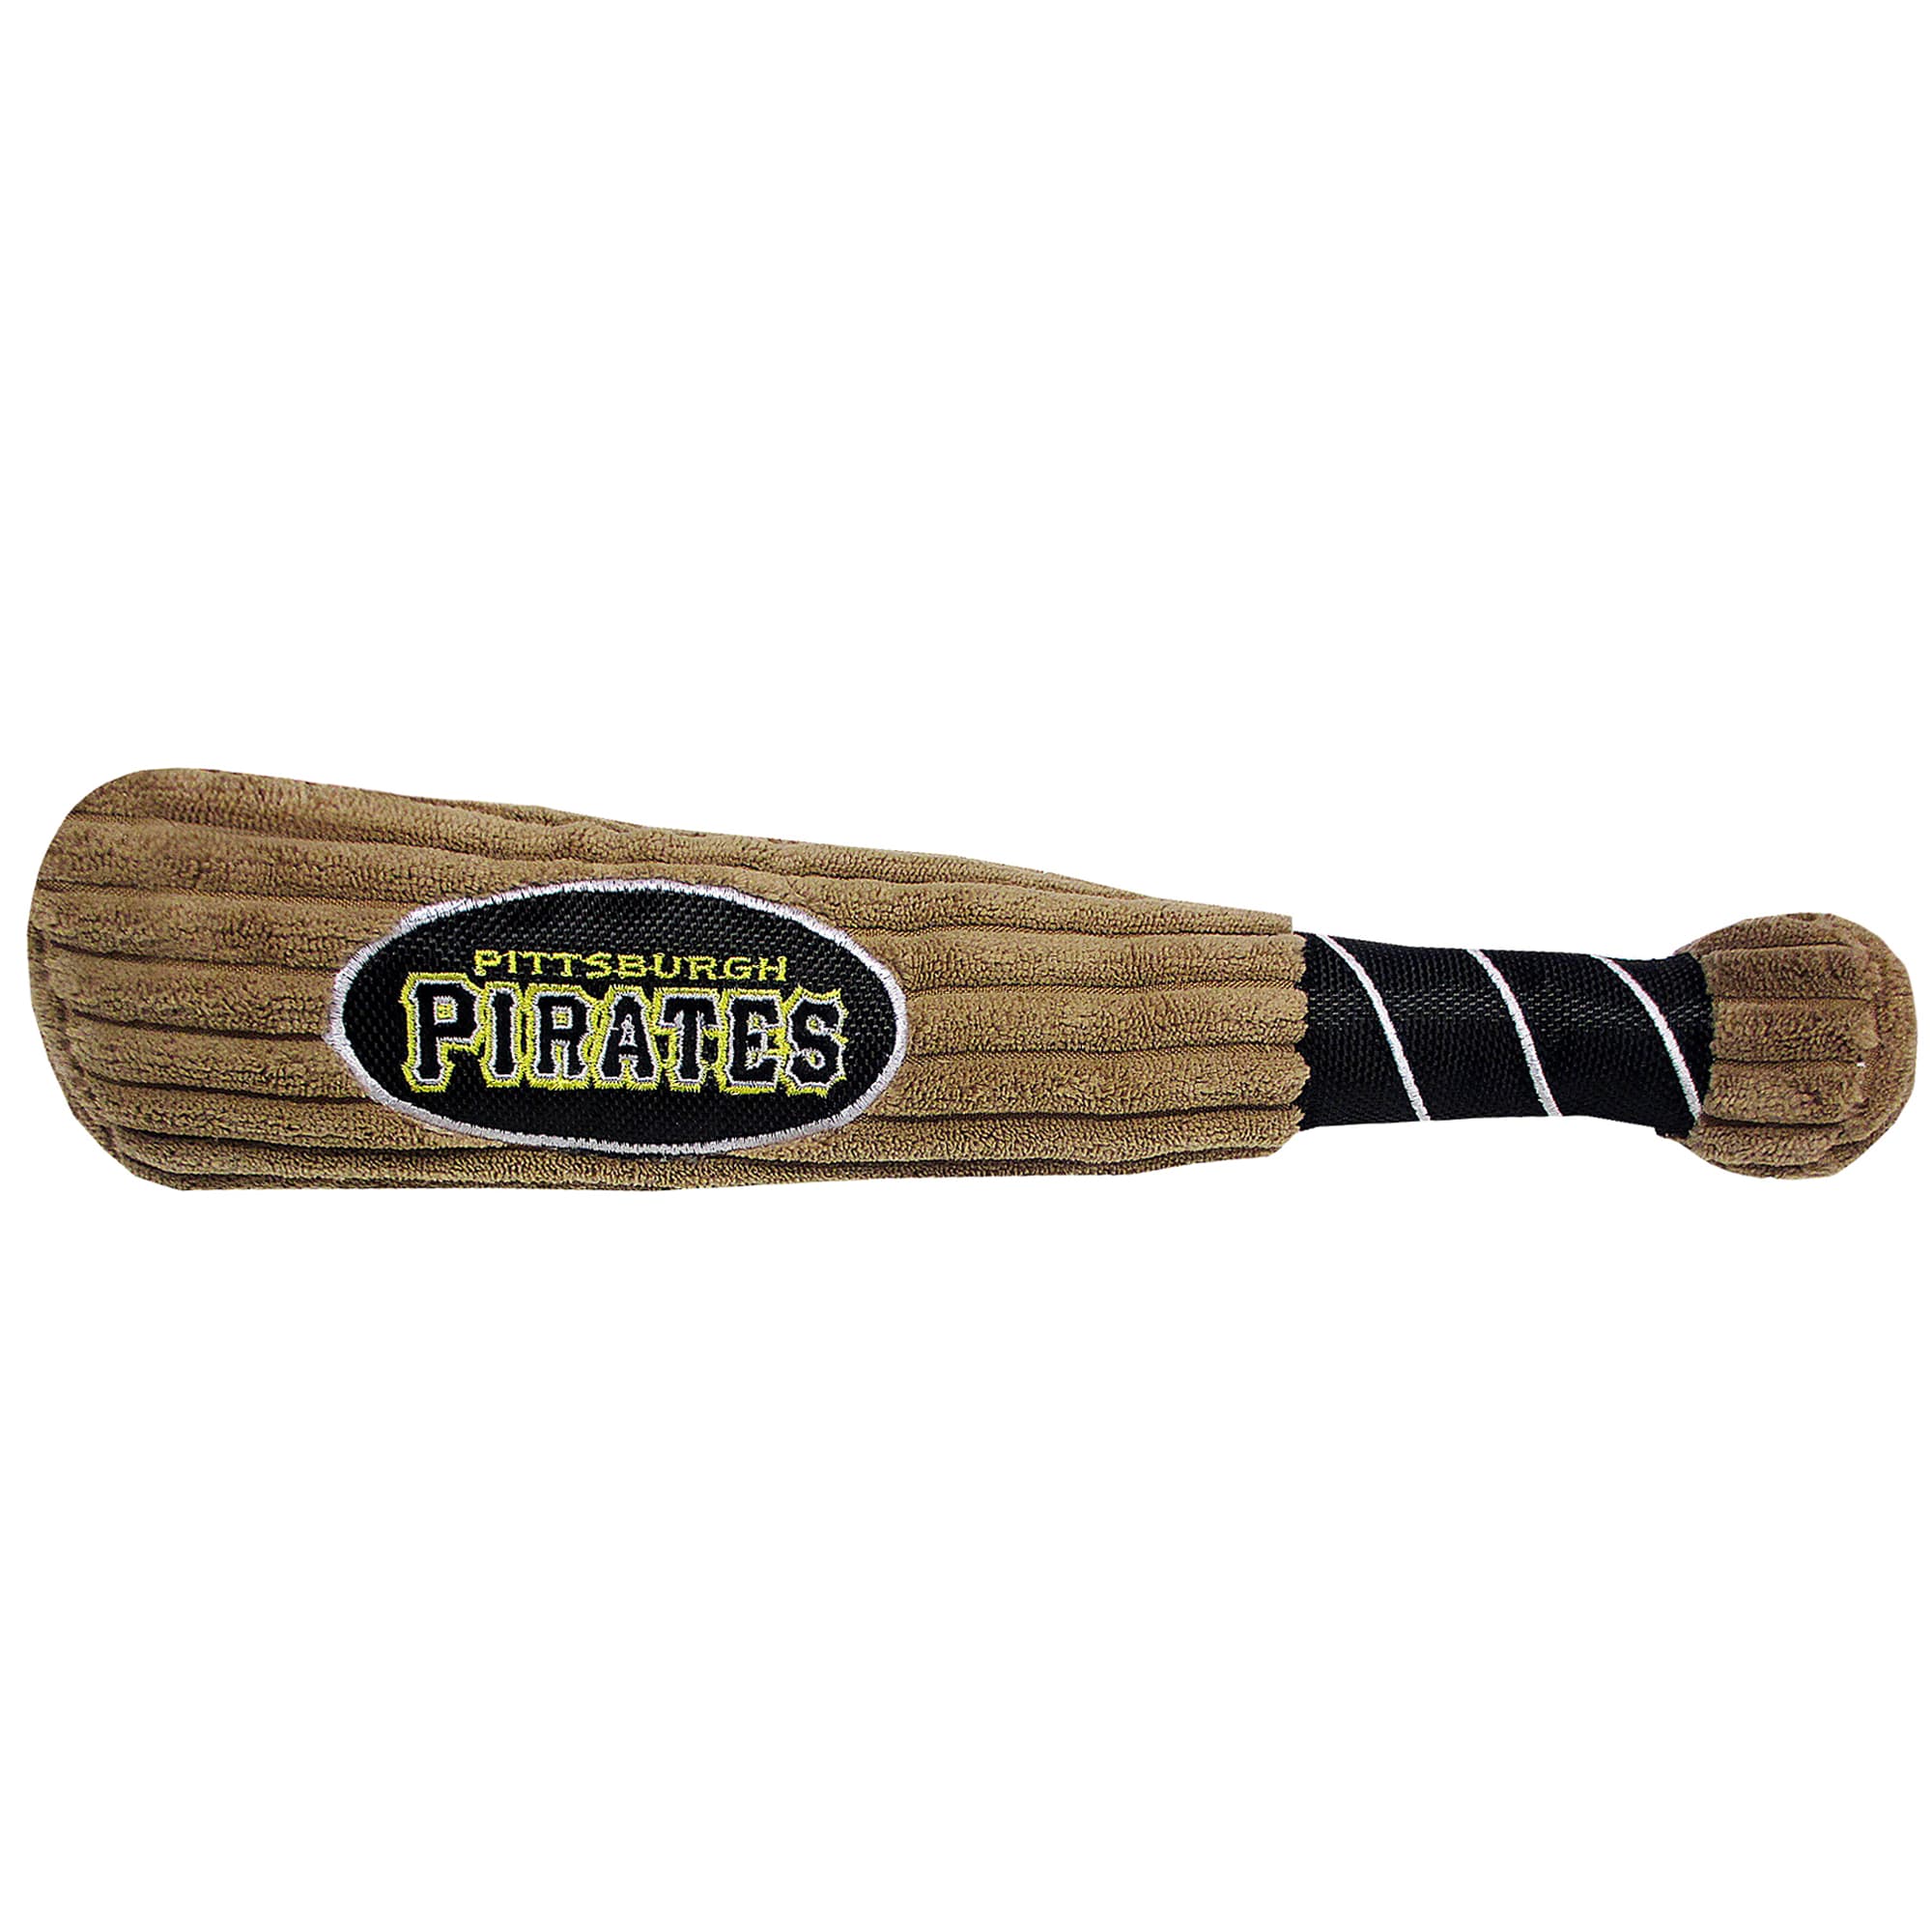 Mlb Pittsburgh Pirates Pets First Pet Baseball Jersey - Black Xl